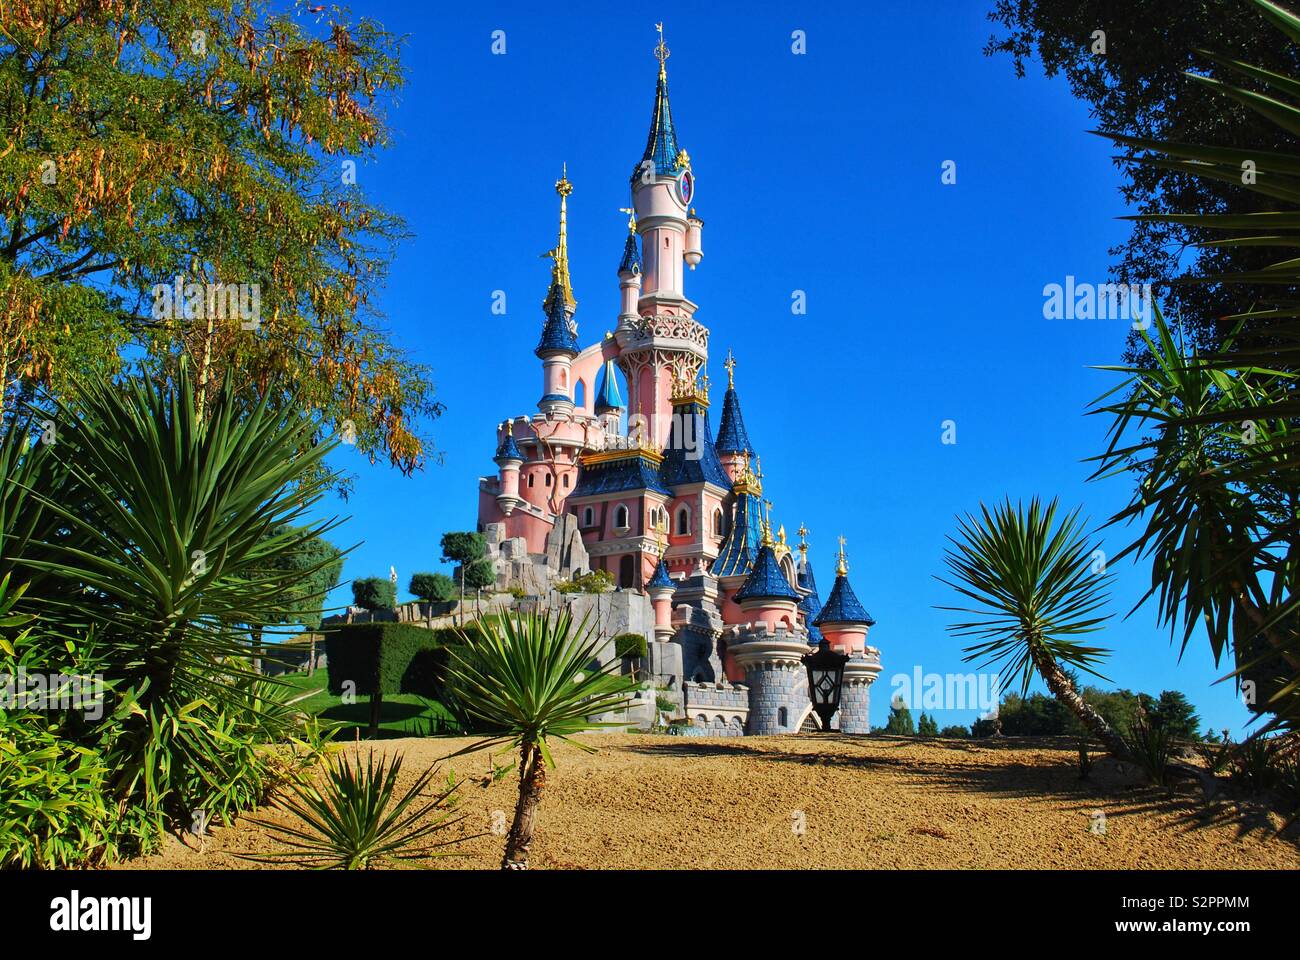 NEW 100 Hi-Definition Royalty Free Disneyland Paris digital photographs